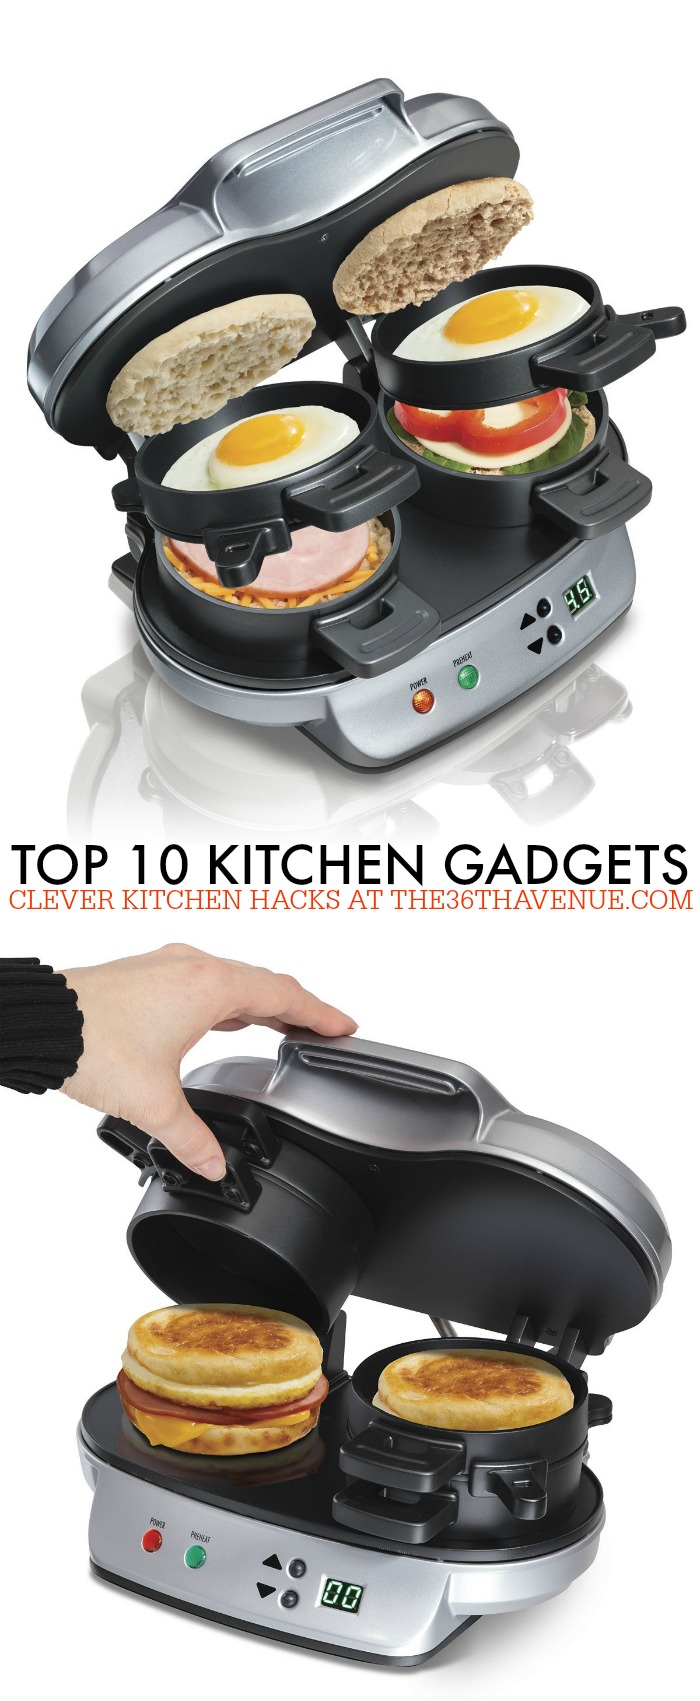 Kitchen Gadgets VS Hacks